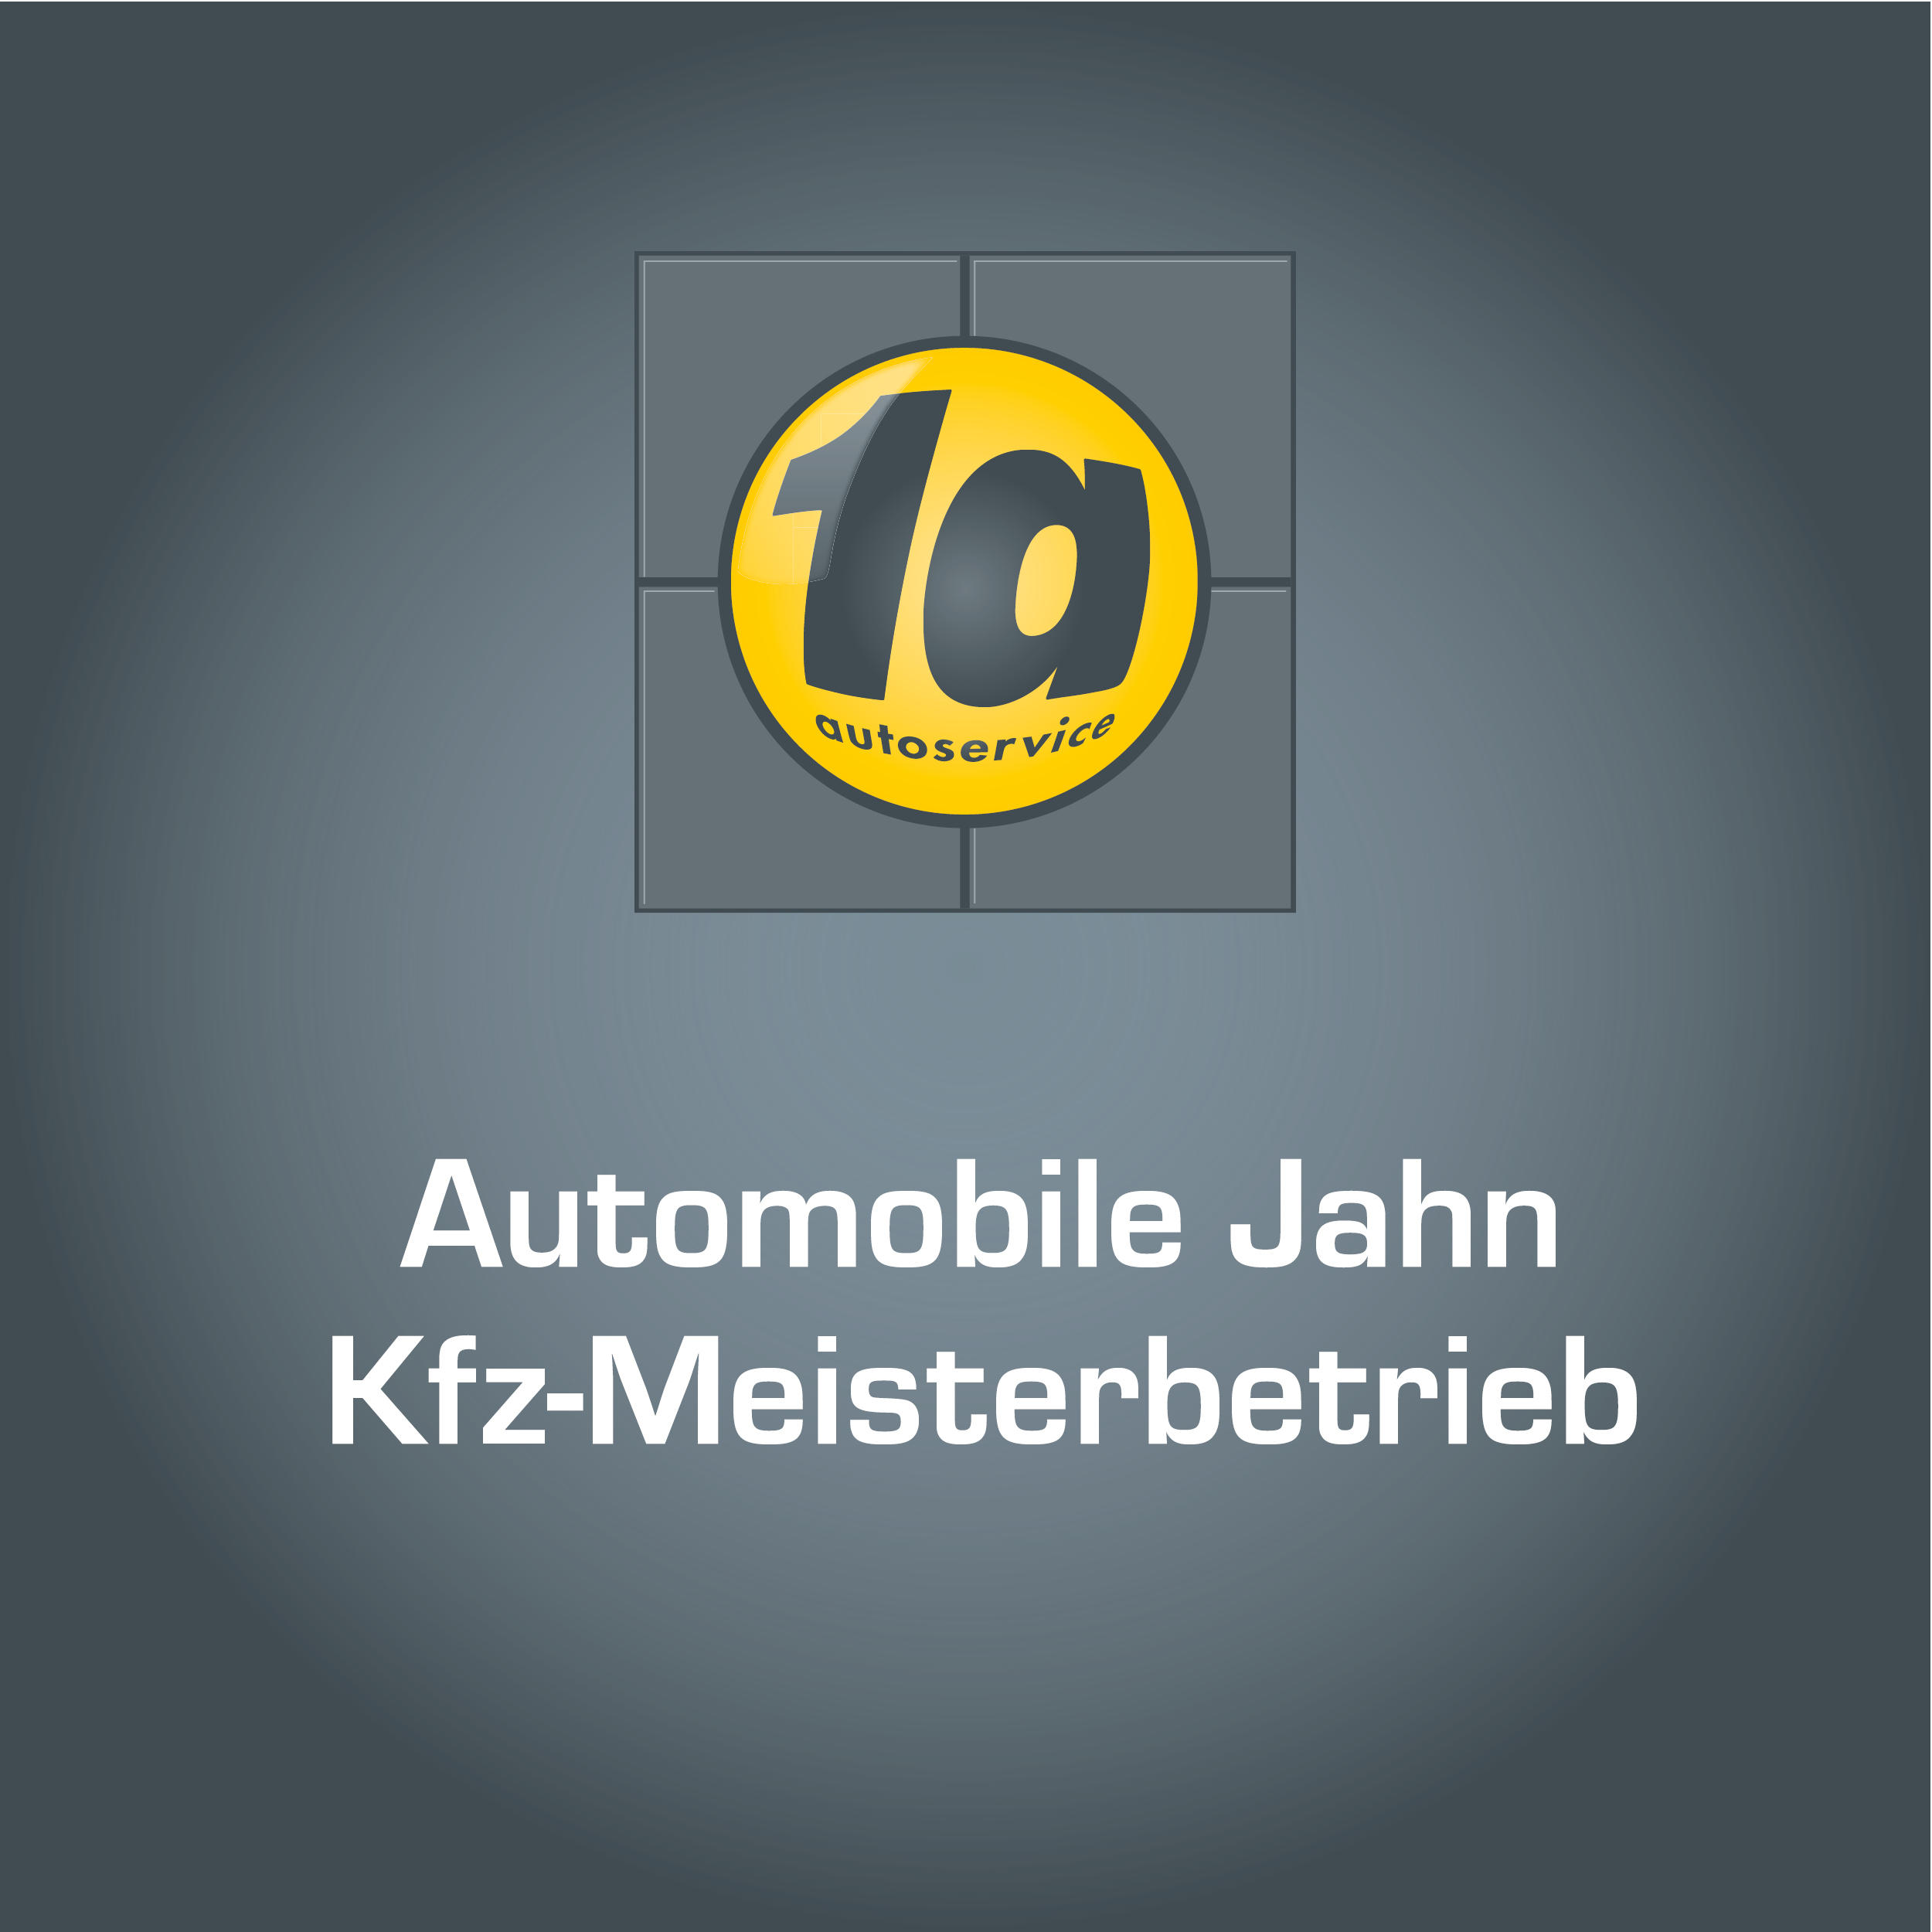 Automobile Jahn Kfz-Meisterbetrieb  